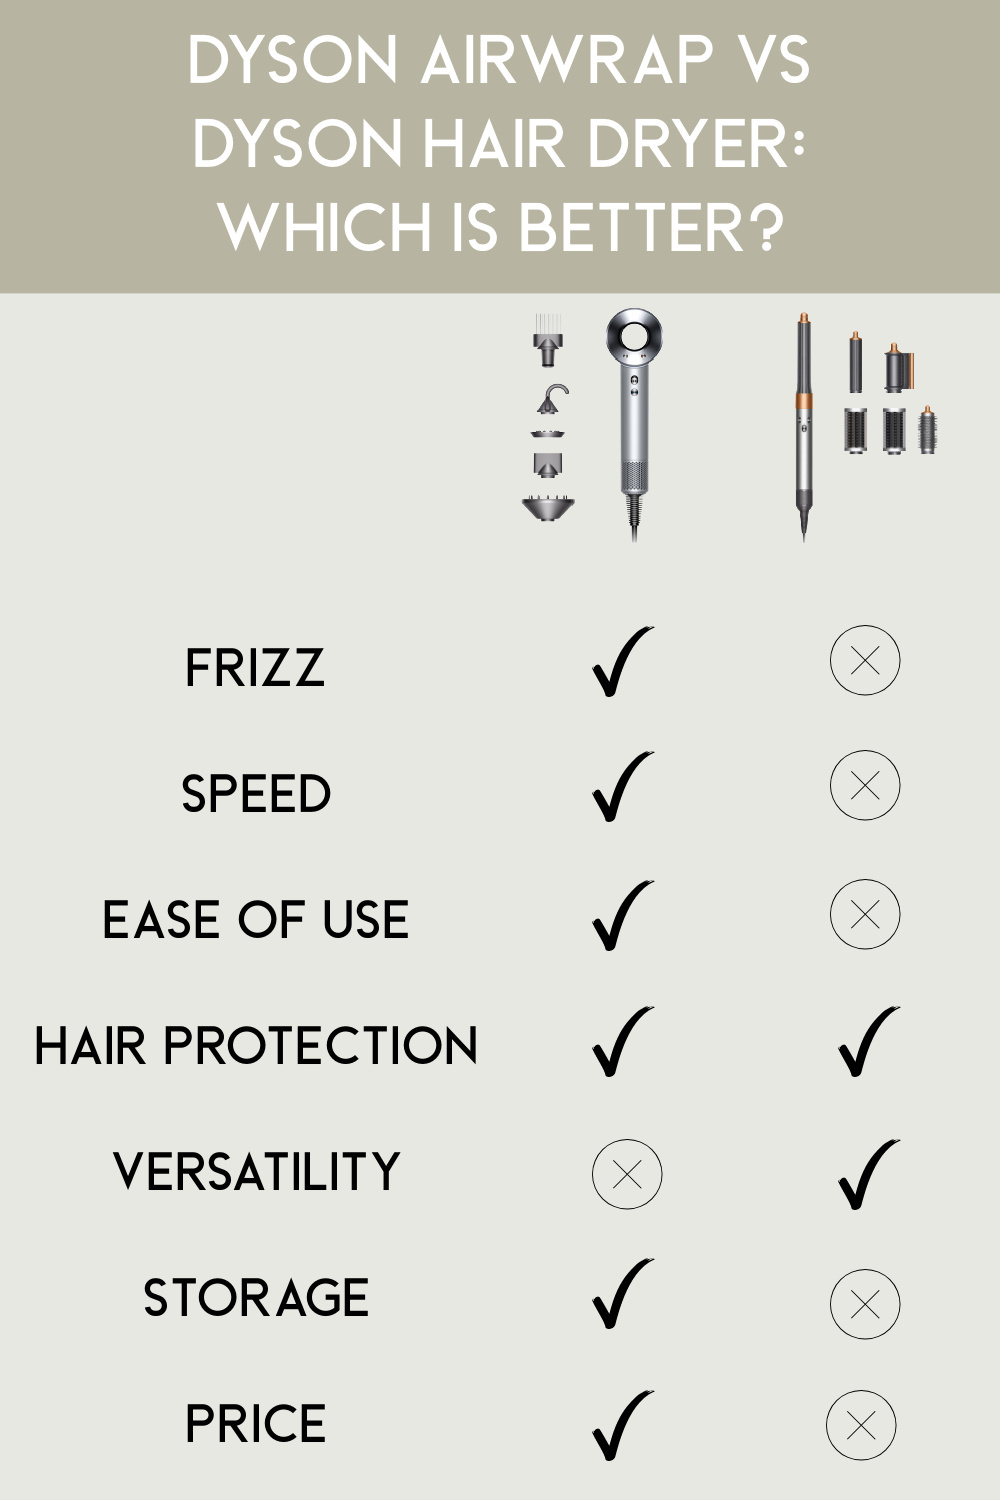 dyson hair dryer vs dyson airwrap perfromance comparison